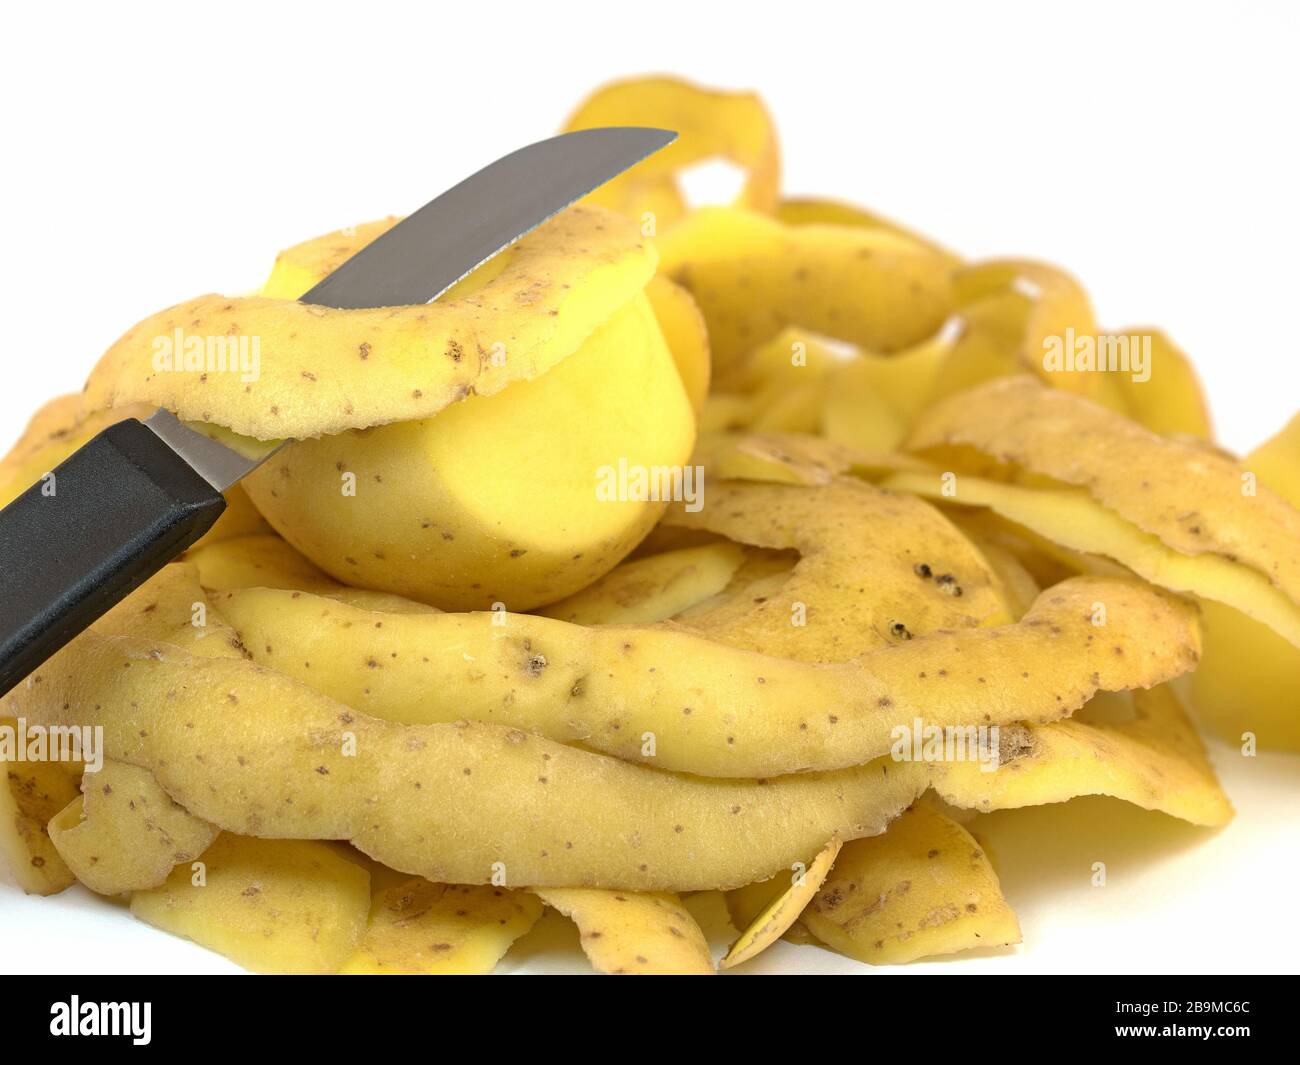 https://c8.alamy.com/comp/2B9MC6C/peeled-potatoes-and-kitchen-knife-against-white-background-2B9MC6C.jpg